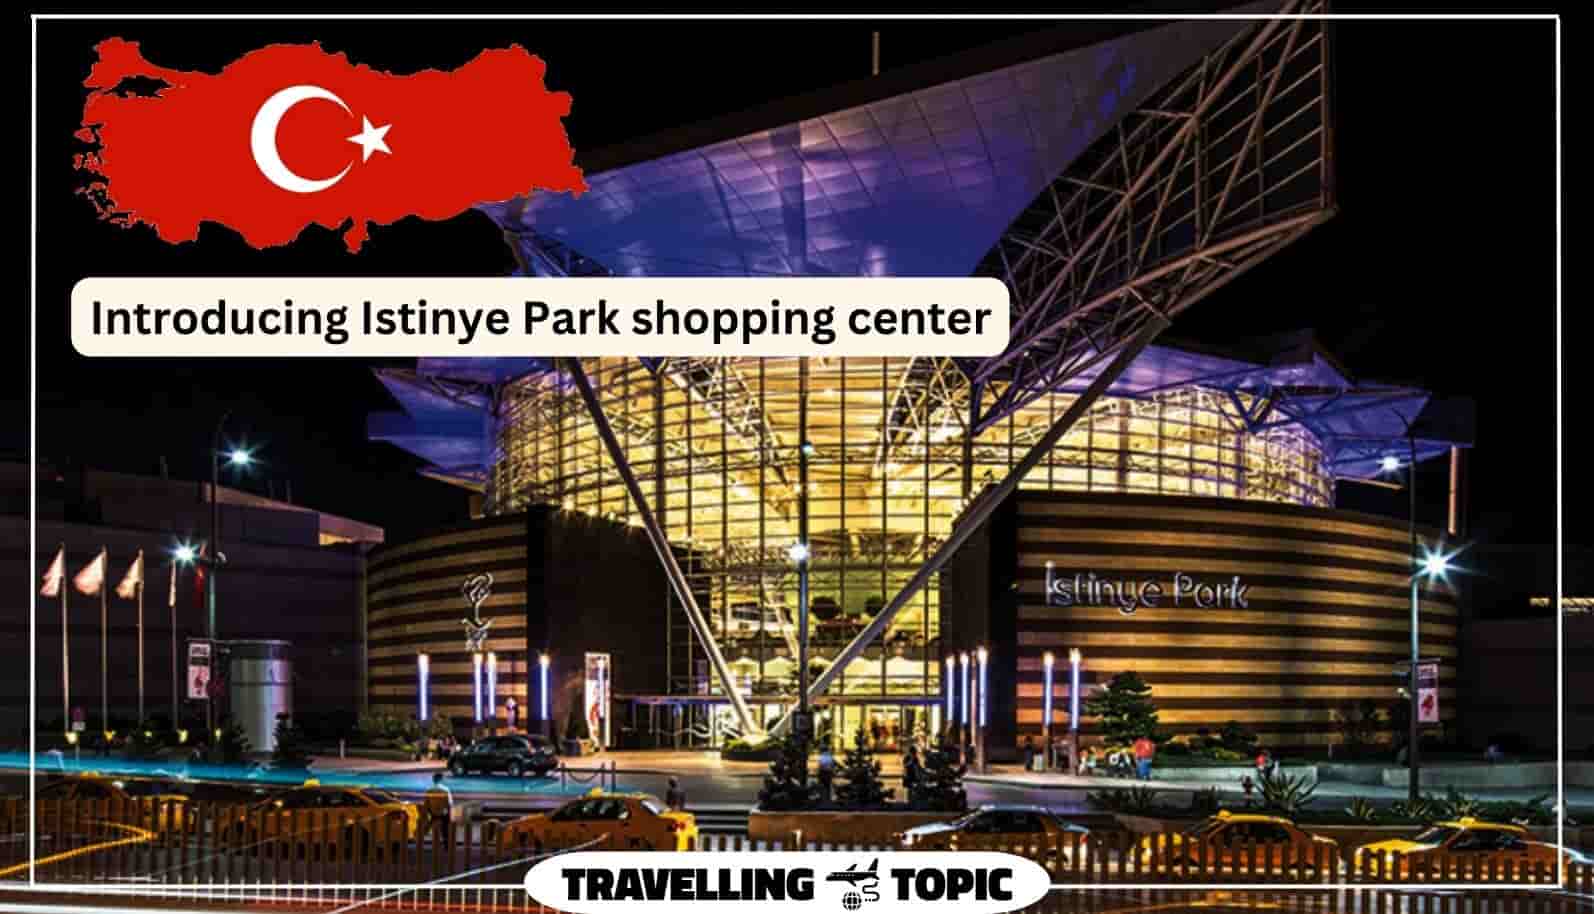 Istinye Park shopping mall on November 4, 2010 in Istanbul, Turkey